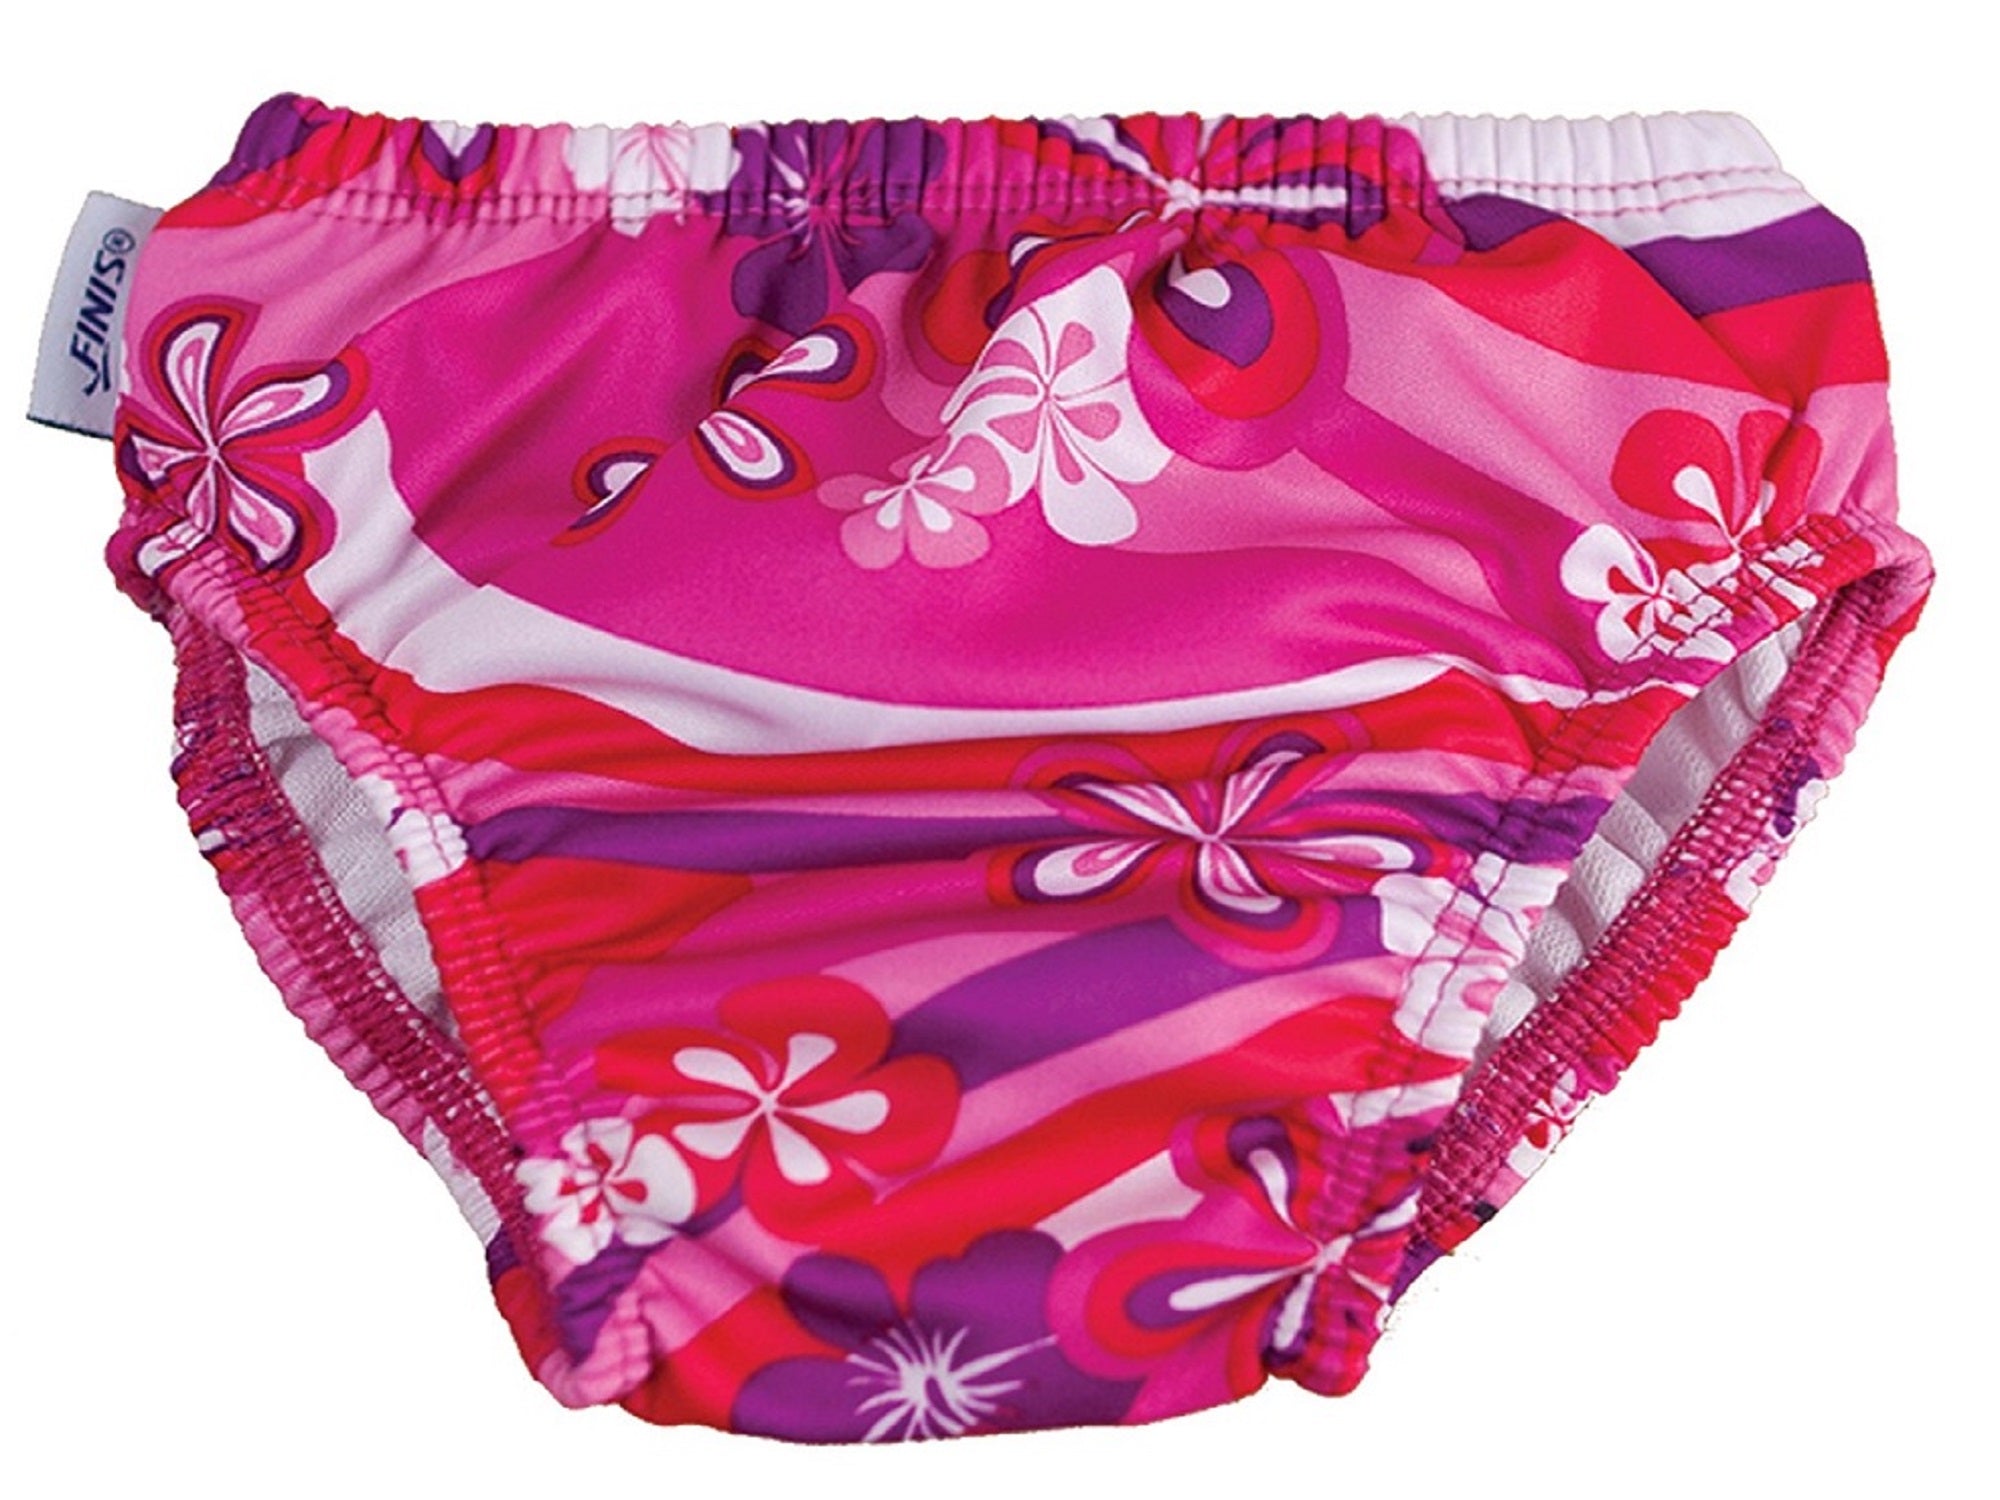 FINIS Flower Power Pink Reusable Swim Diaper, Large (12-18 Months)